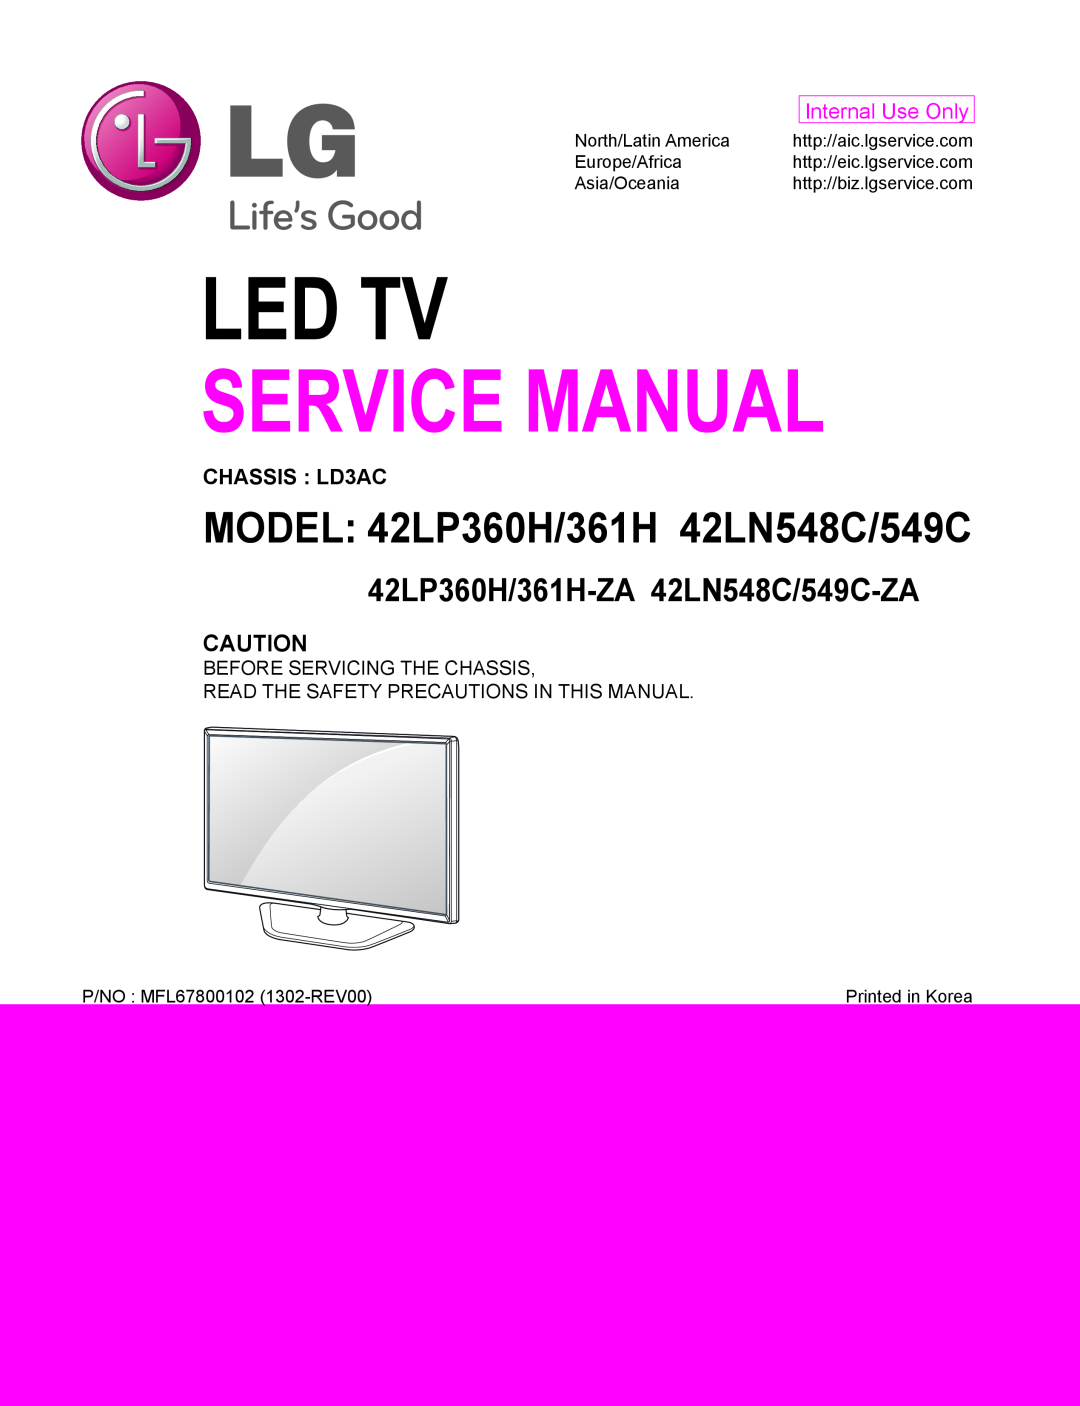 LG Electronics 361H-ZA service manual Led Tv, Service Manual, MODEL 42LP360H/361H 42LN548C/549C, Internal Use Only 